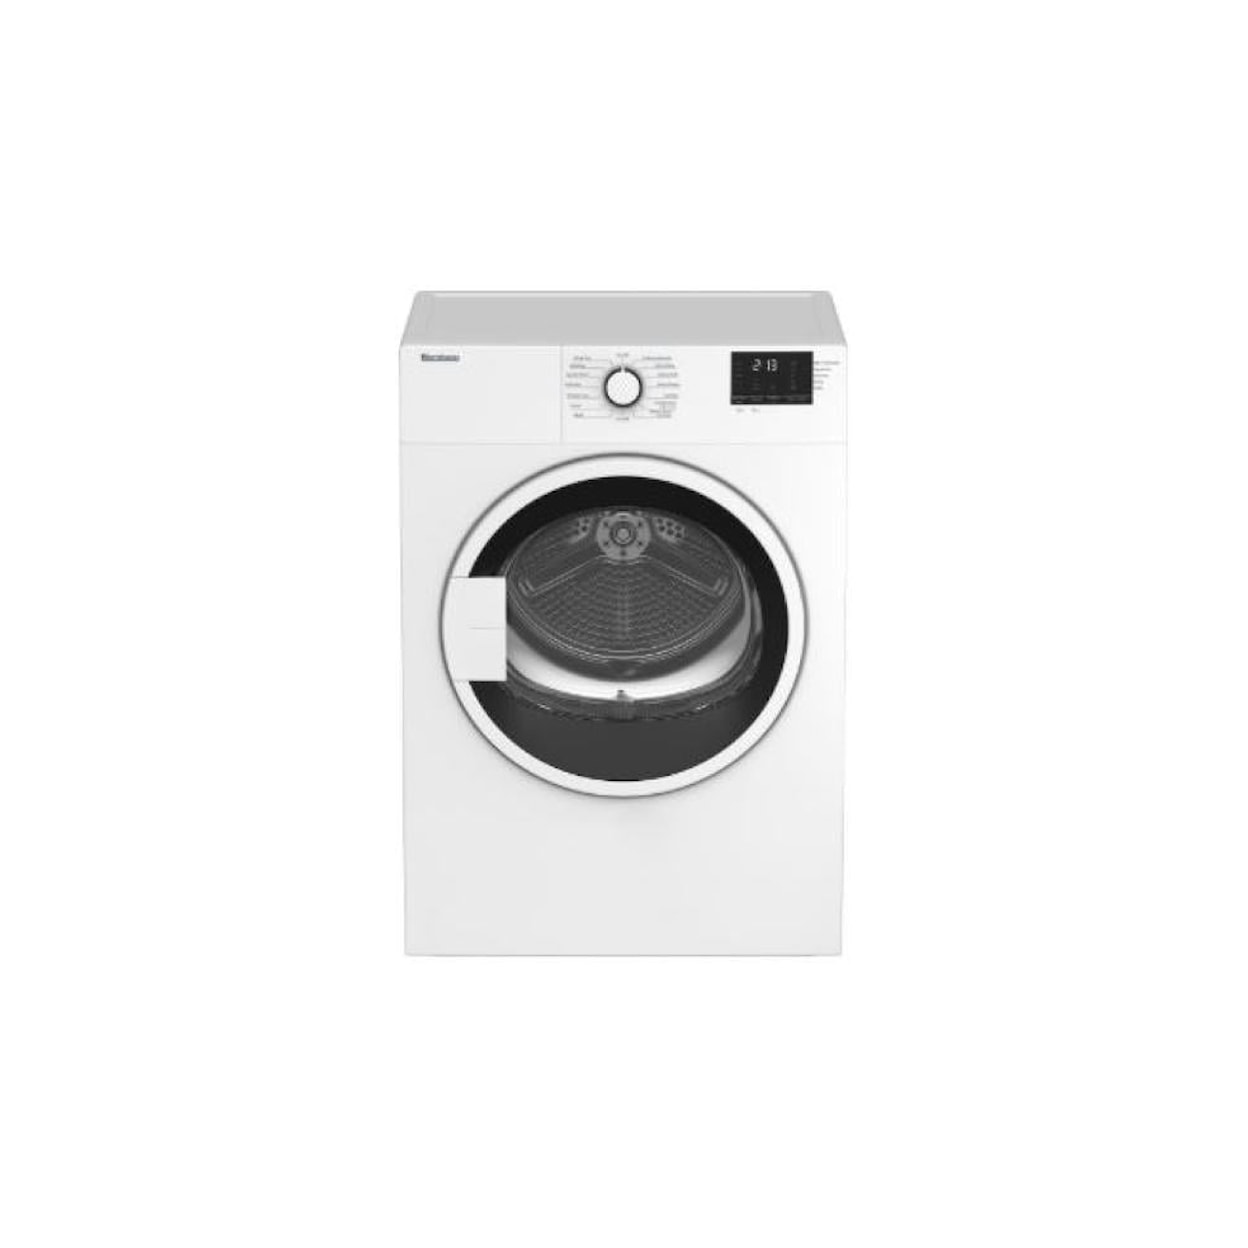 Blomberg Appliances Laundry Dryer